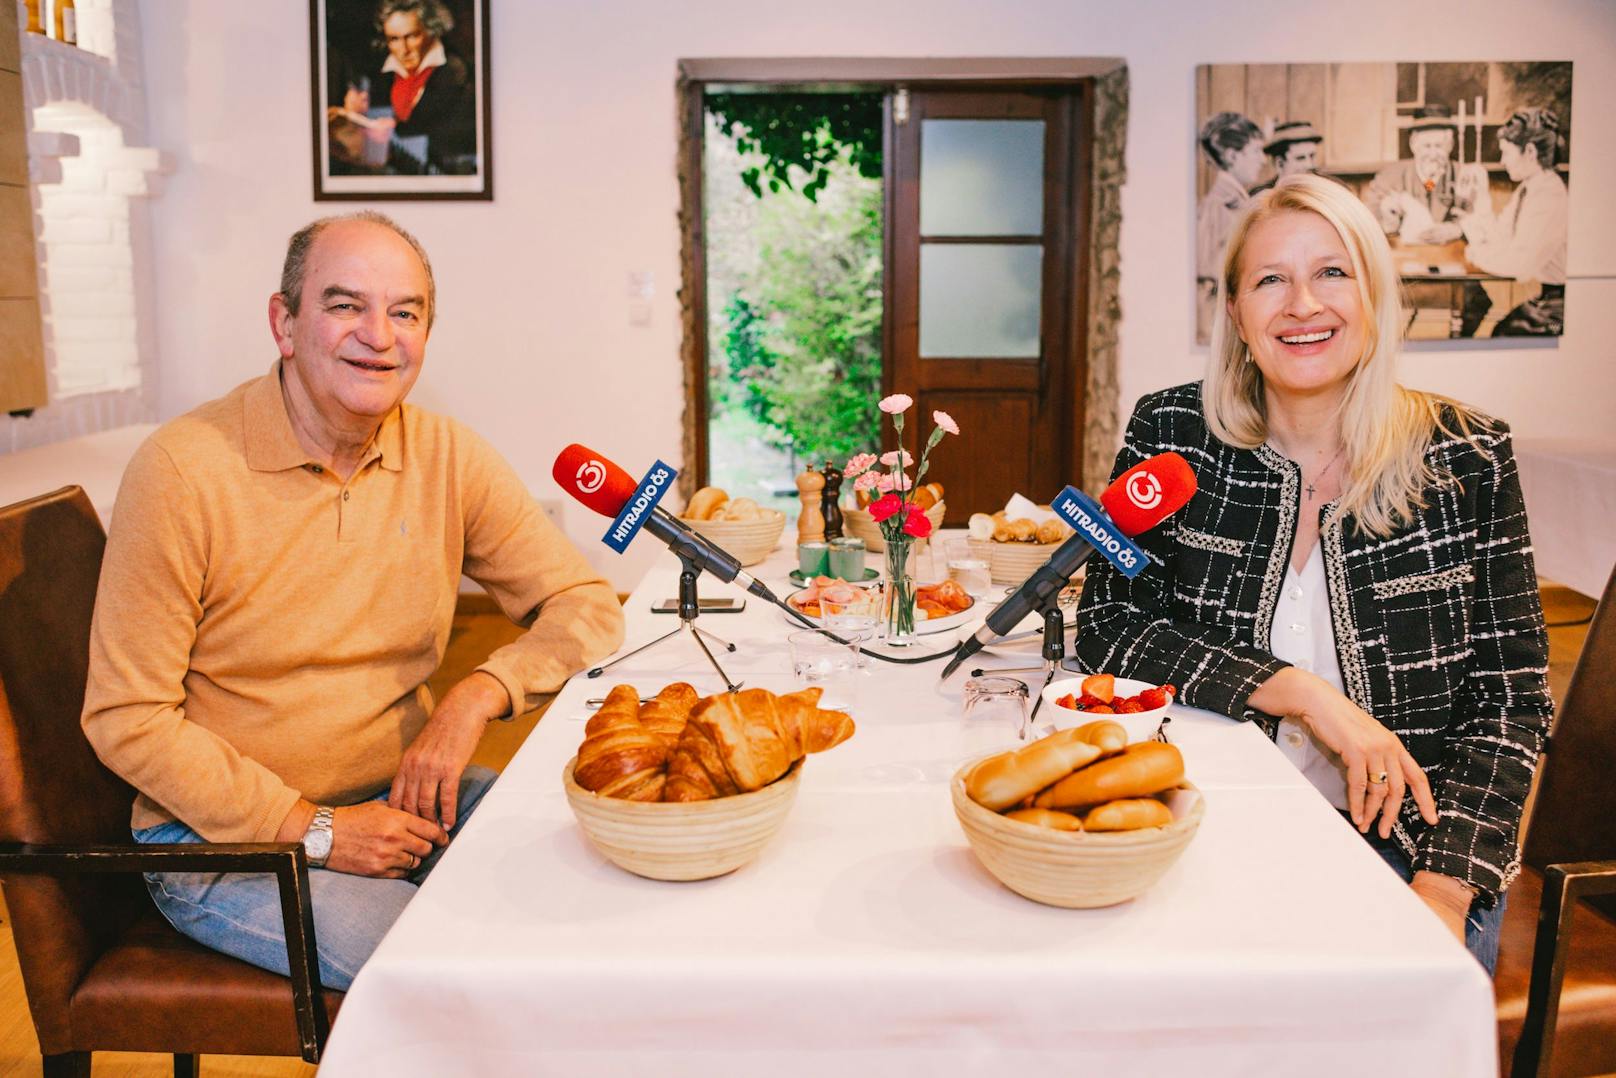 Herbert Prohaska zu Gast bei Claudia Stöckls "Frühstück bei mir".